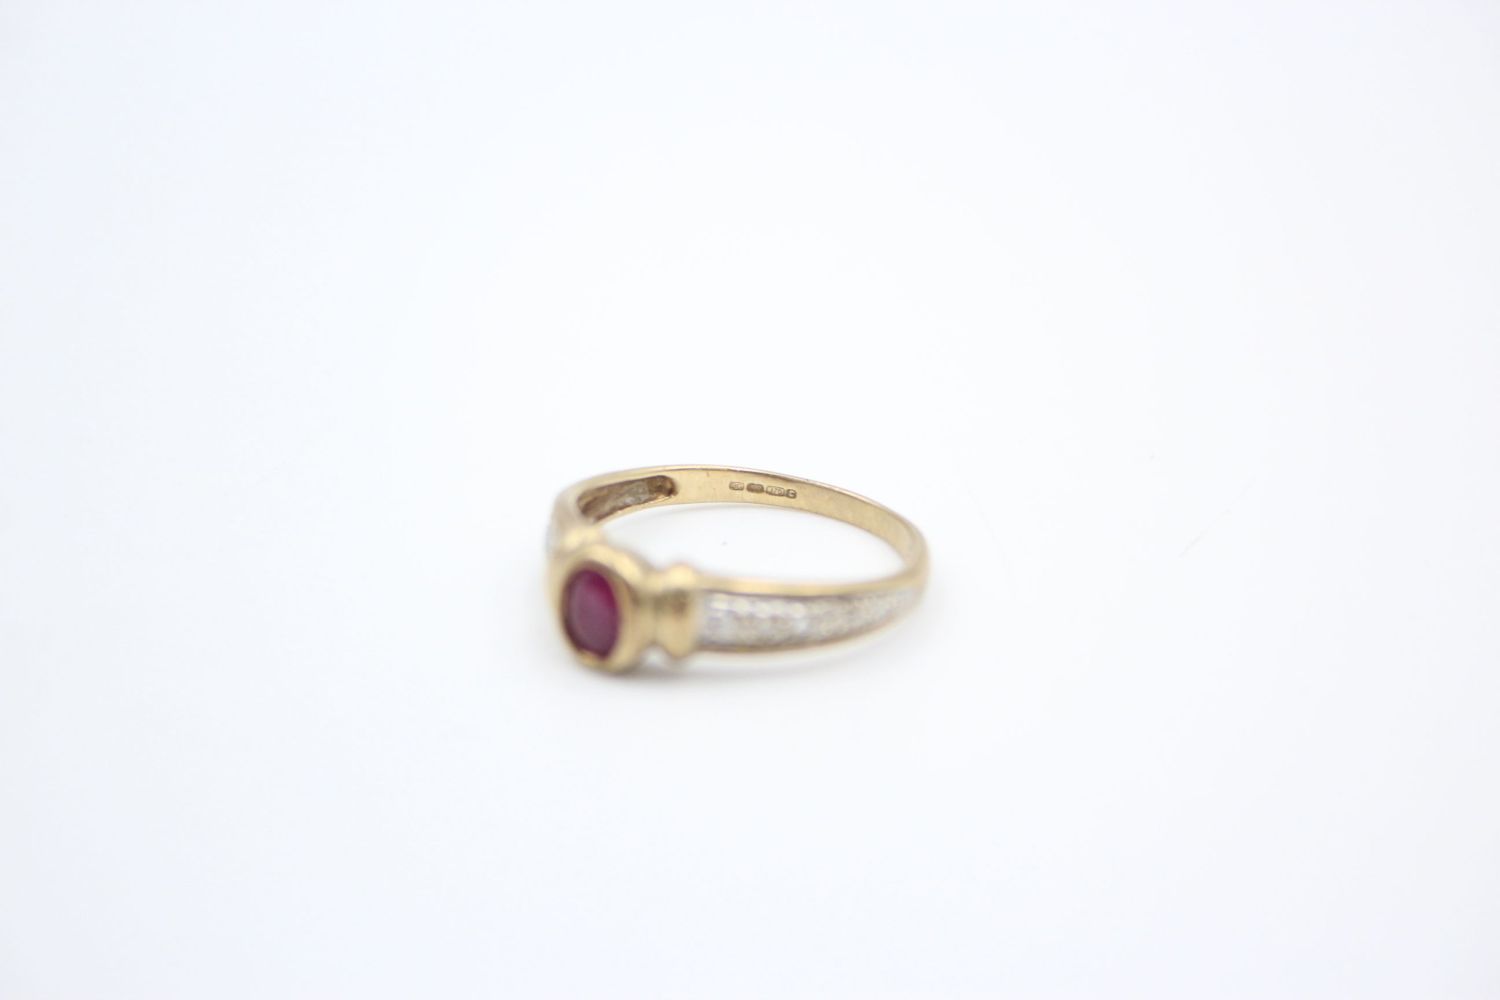 9ct Gold ruby & diamond detail dress ring 2 grams gross - Image 4 of 6